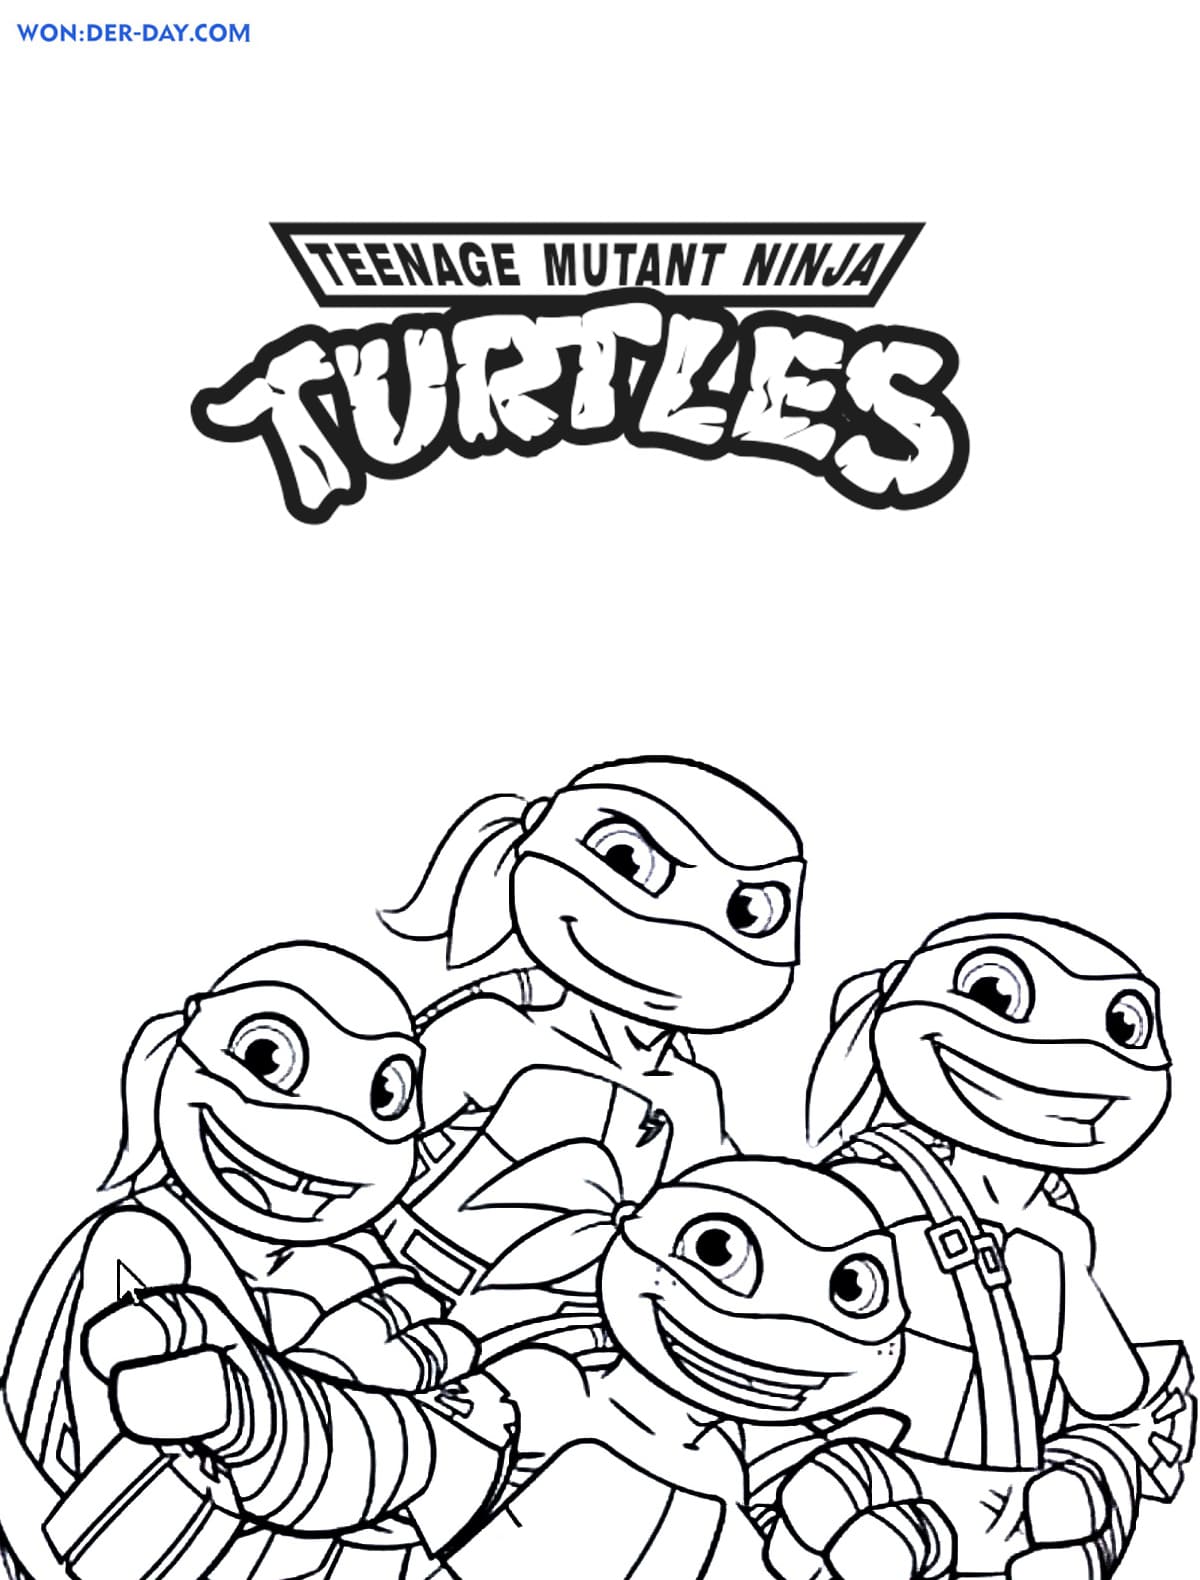 Teenage Mutant Ninja Turtles coloring pages —